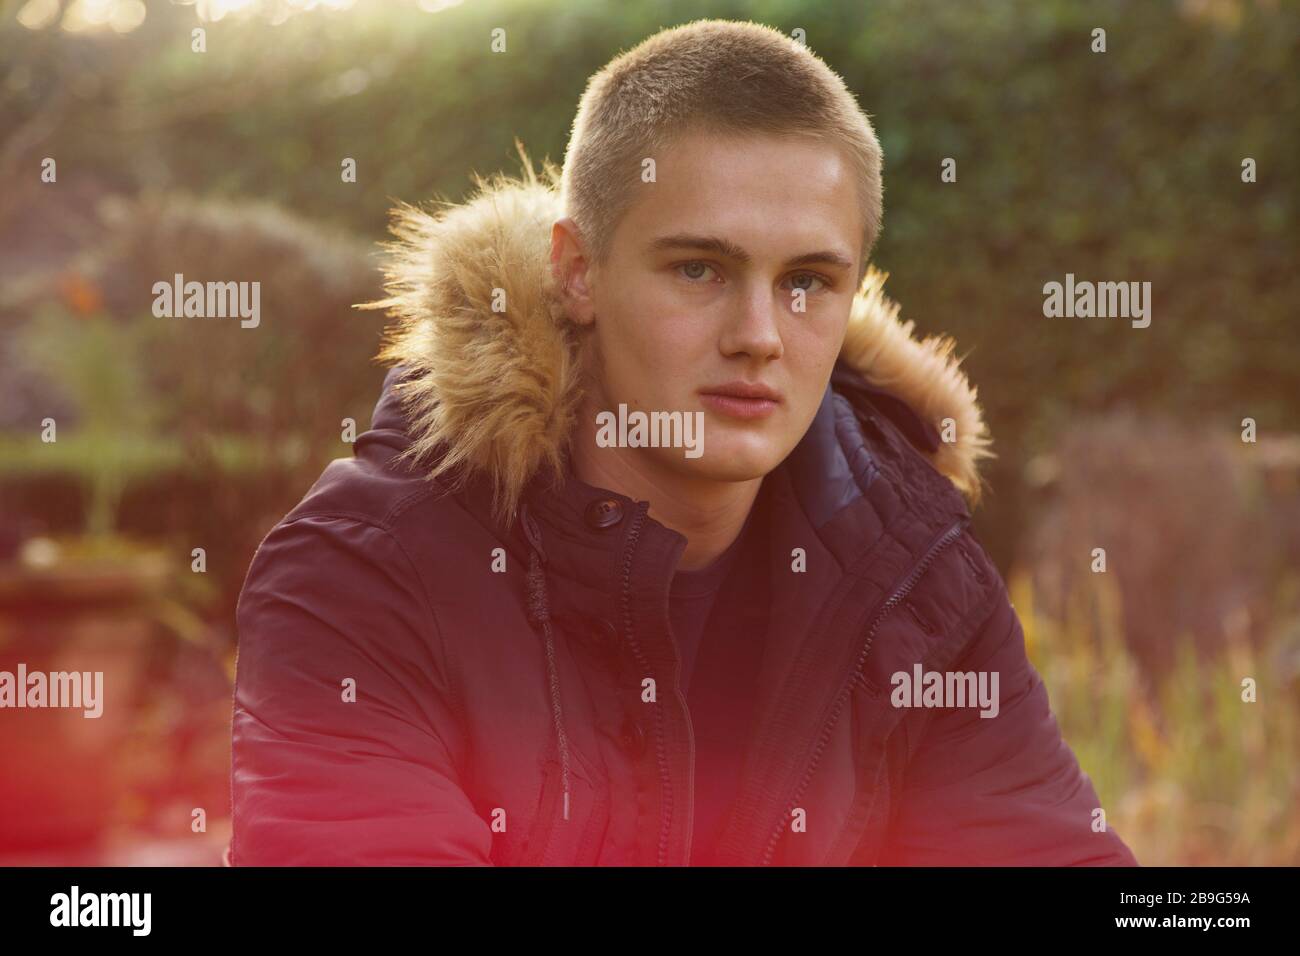 Portrait selbstbewusster Teenager in Jacke mit Fellhaube im Park Stockfoto